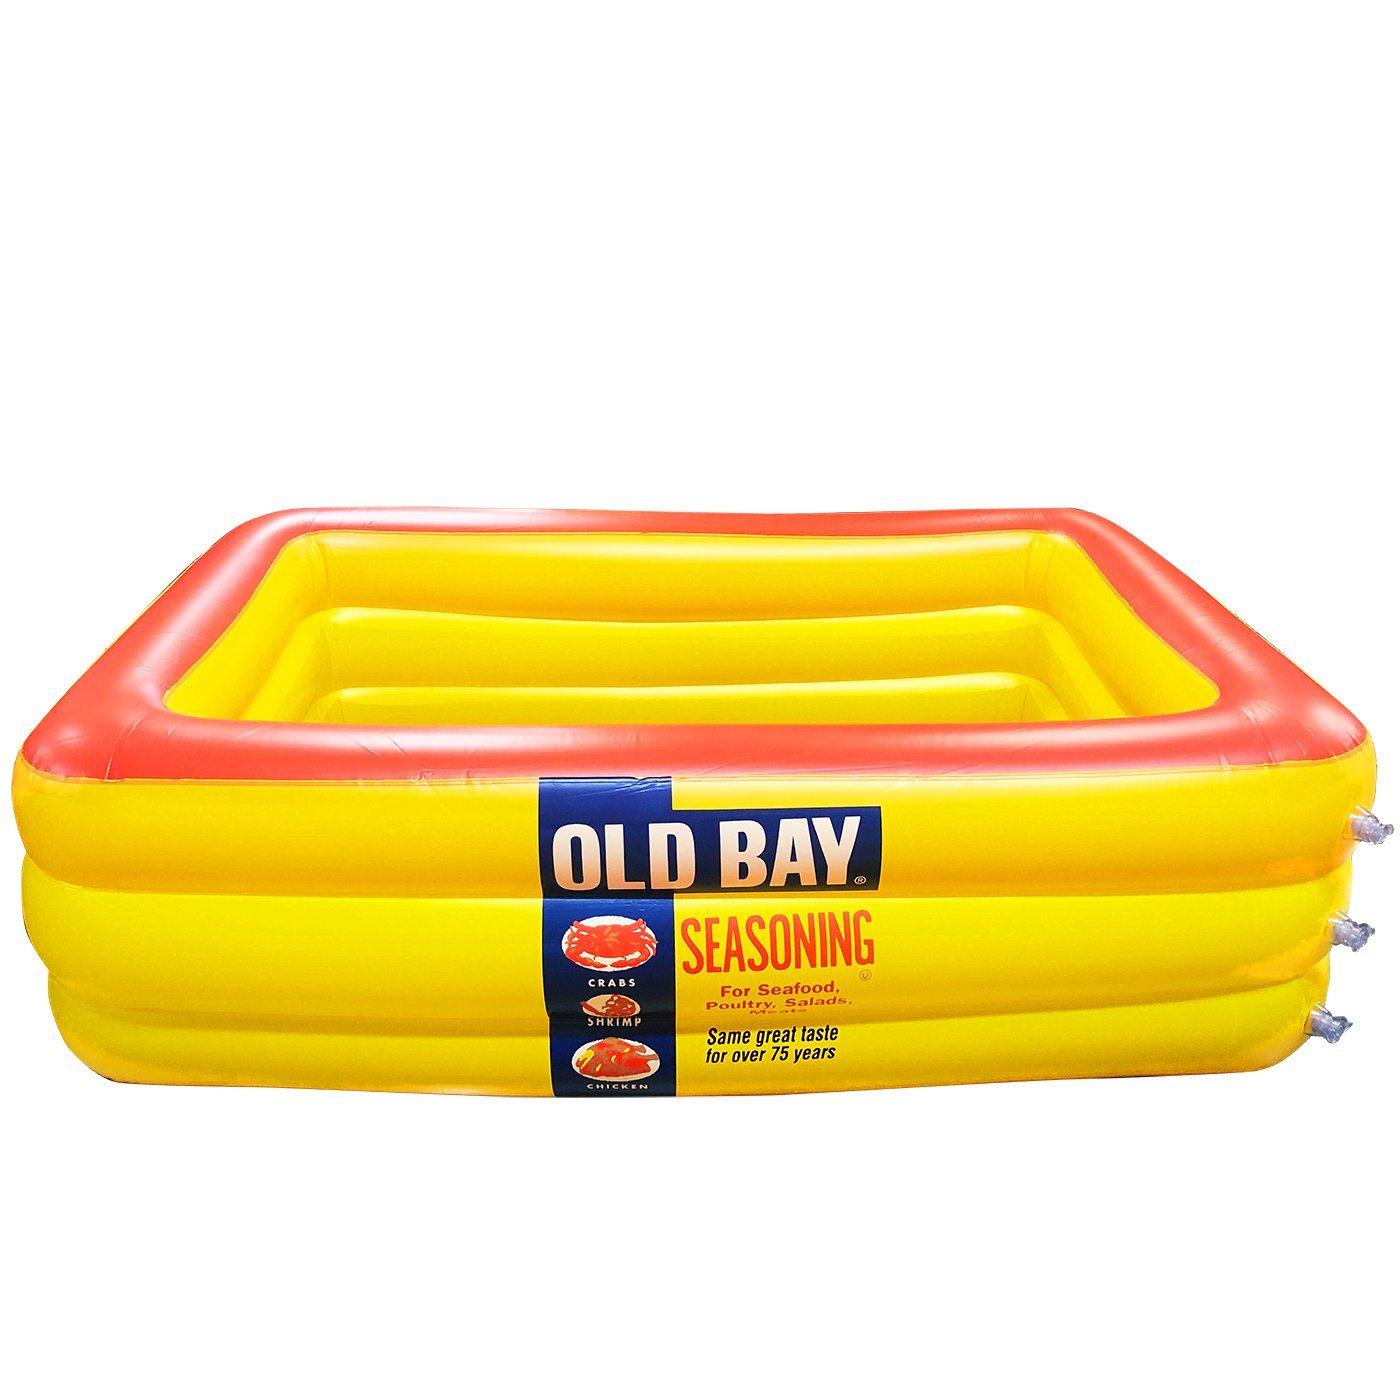 OLD BAY / Rectangular Inflatable Pool